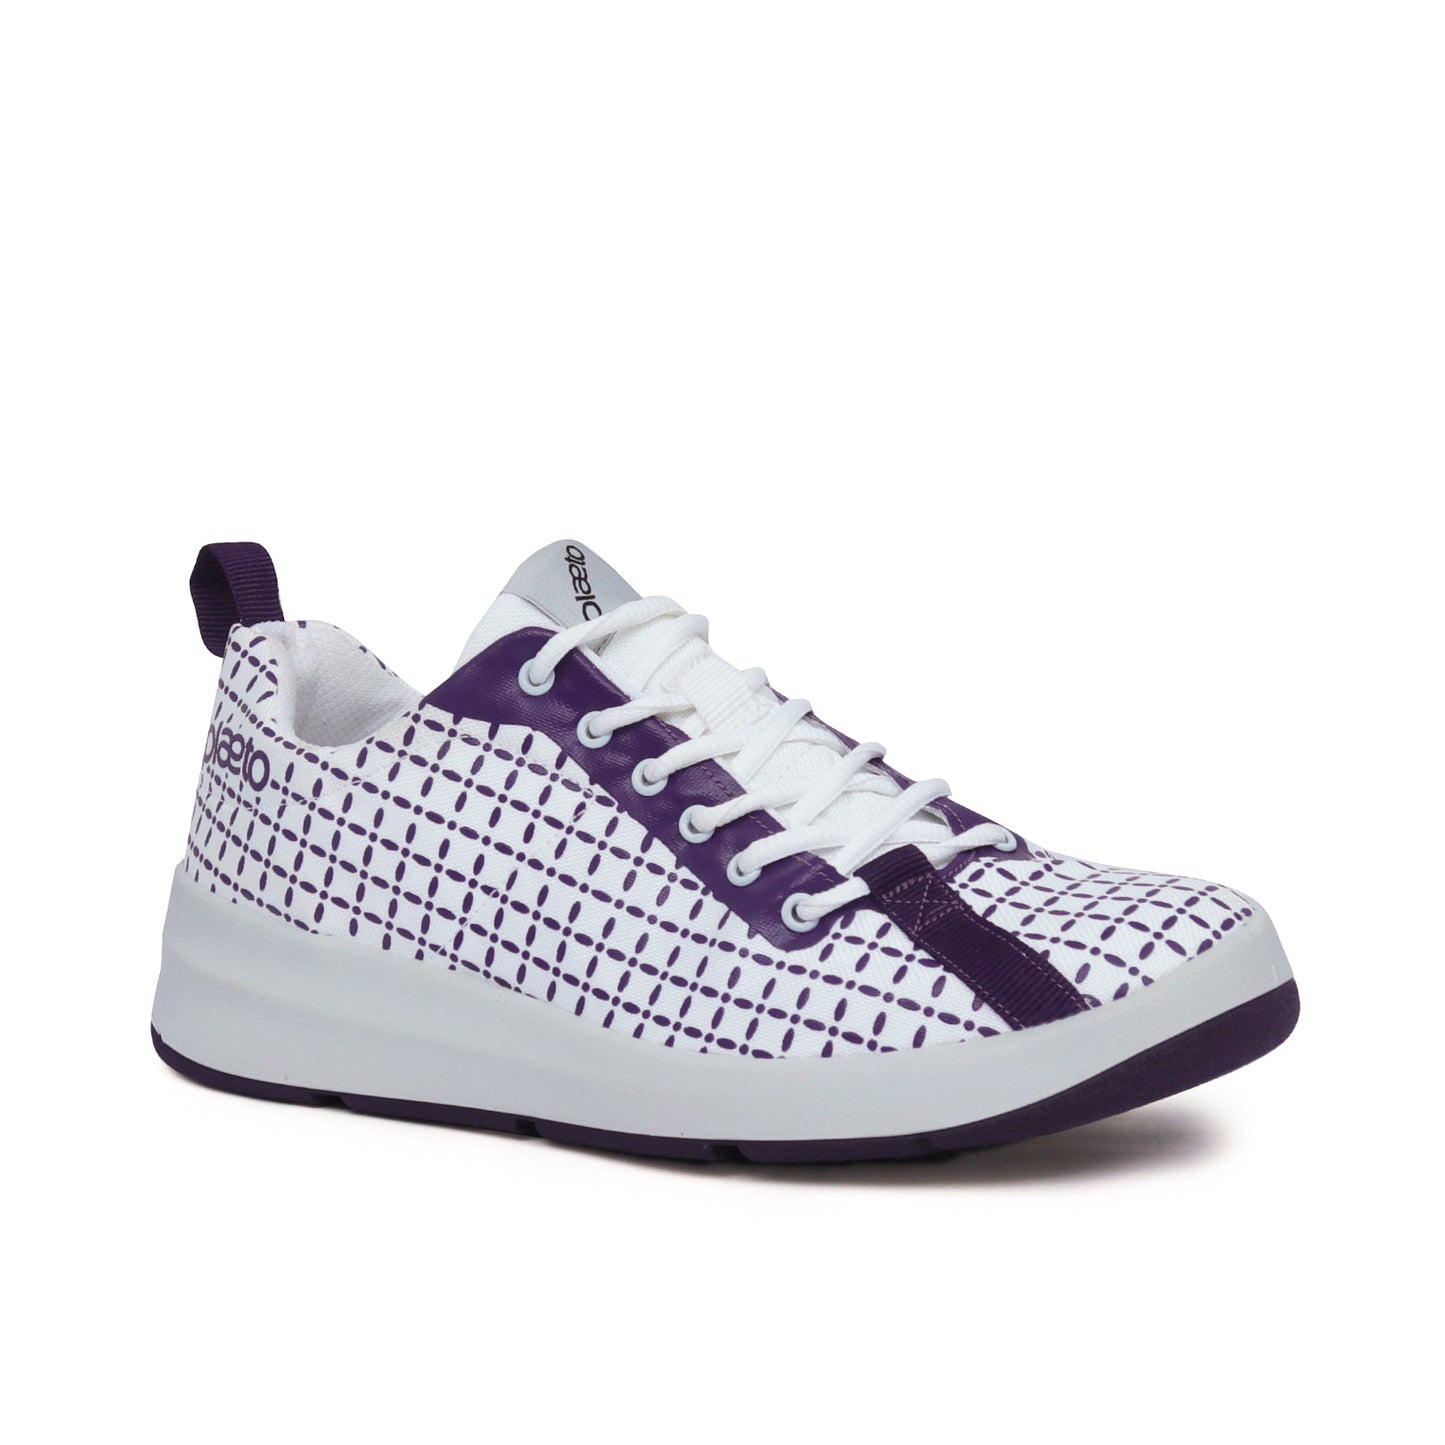 Riff Women's Sports Shoes - White / Purple